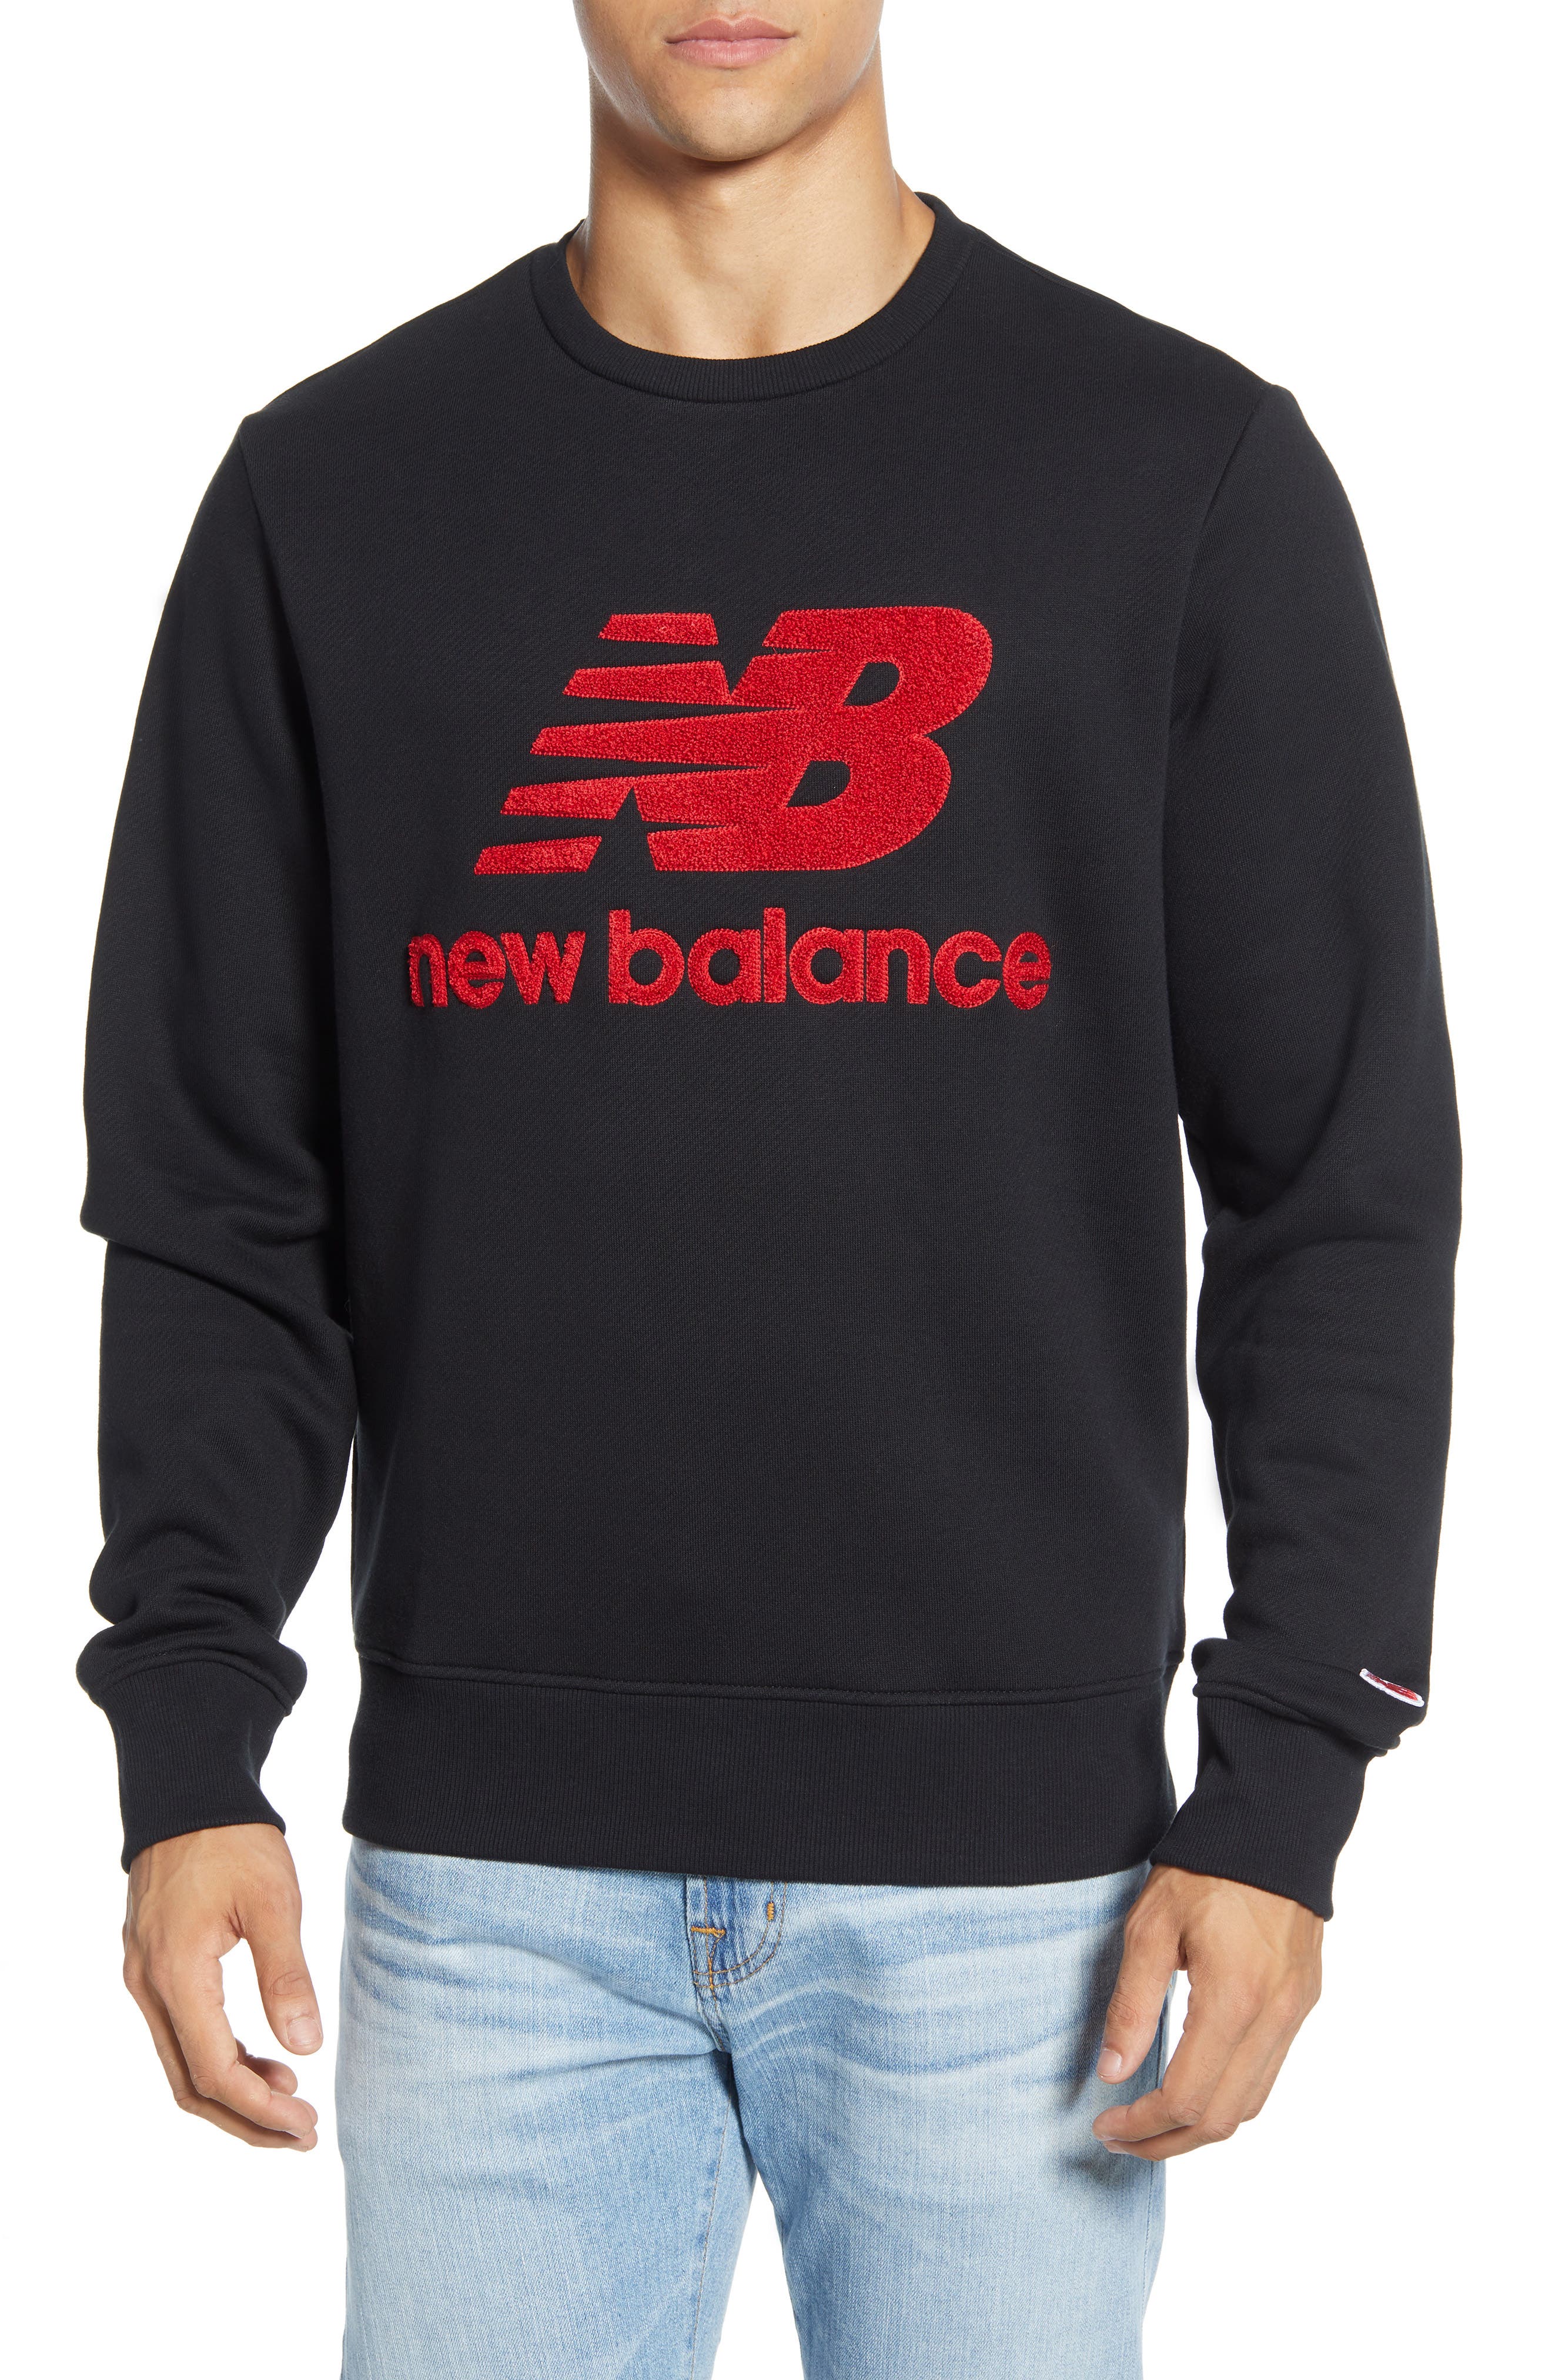 new balance black sweatshirt